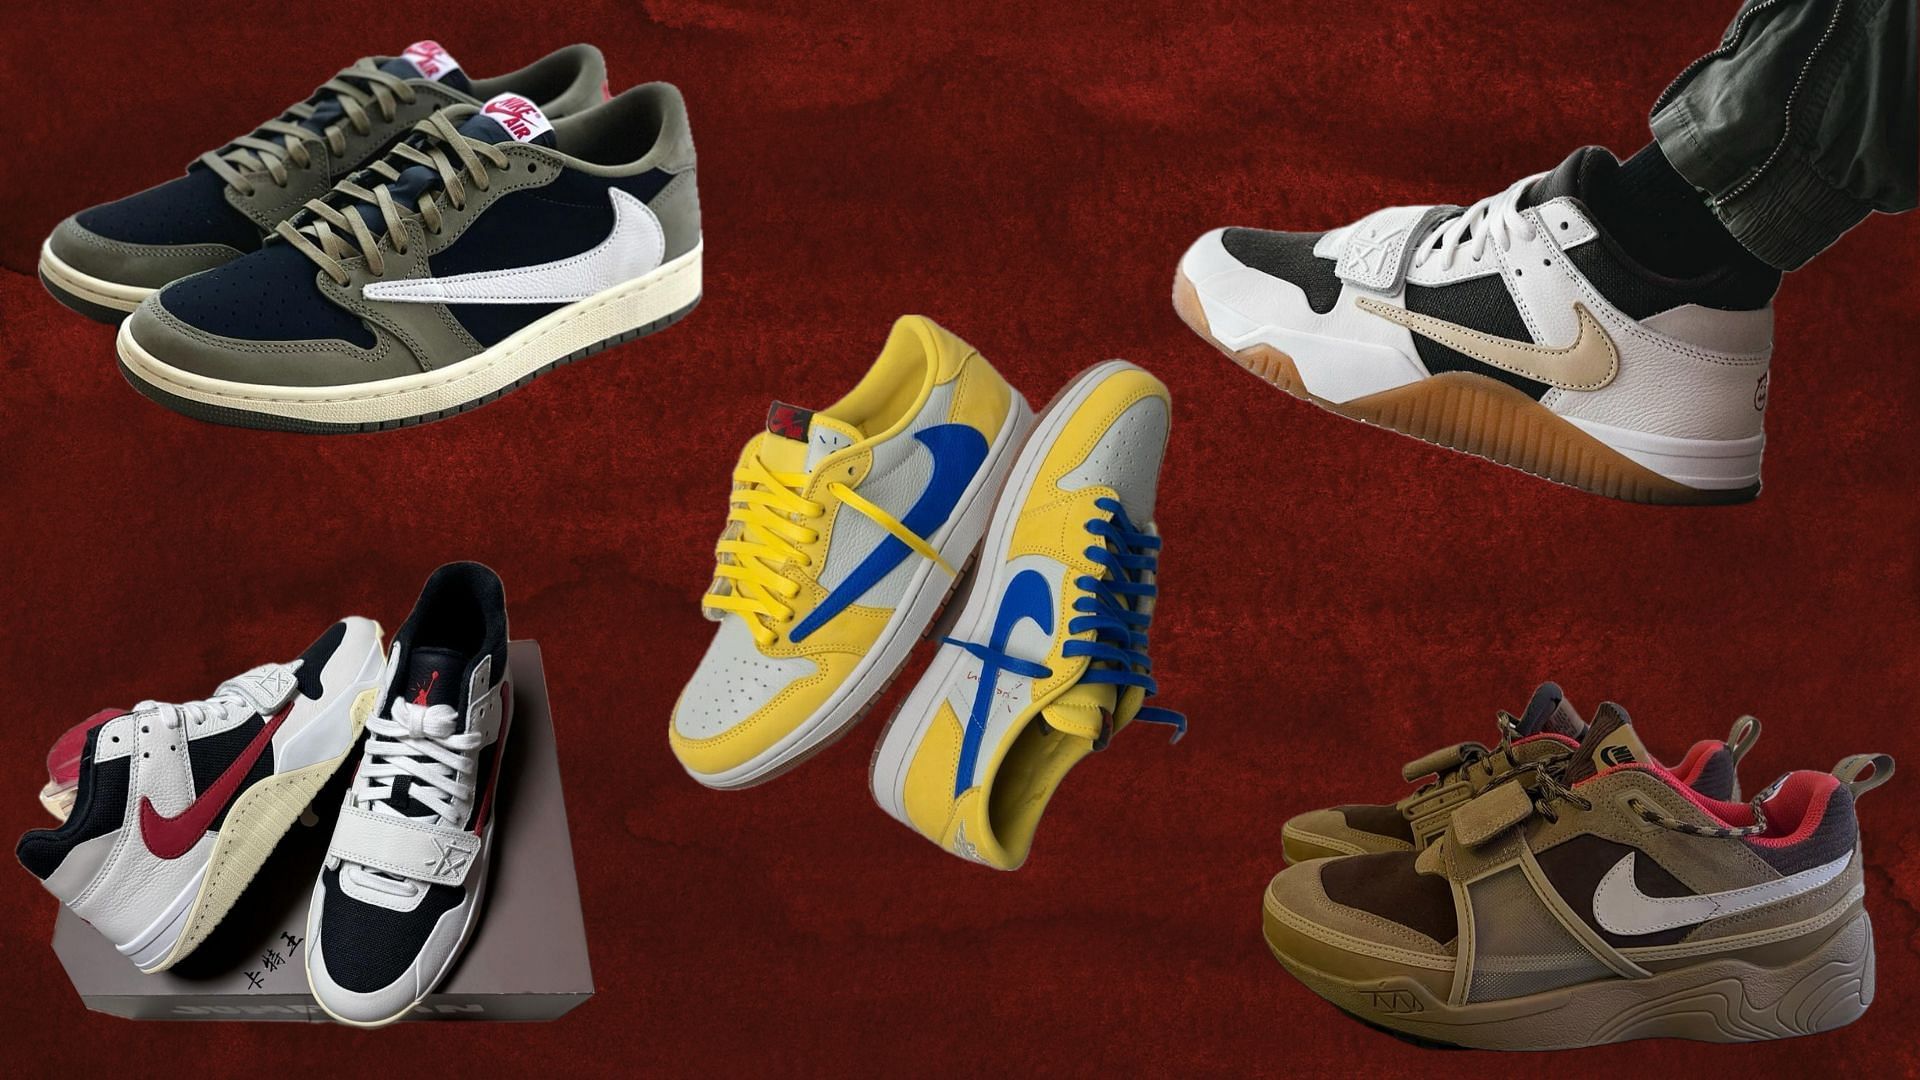 Five upcoming Travis Scott sneaker releases (Image via Sportskeeda)